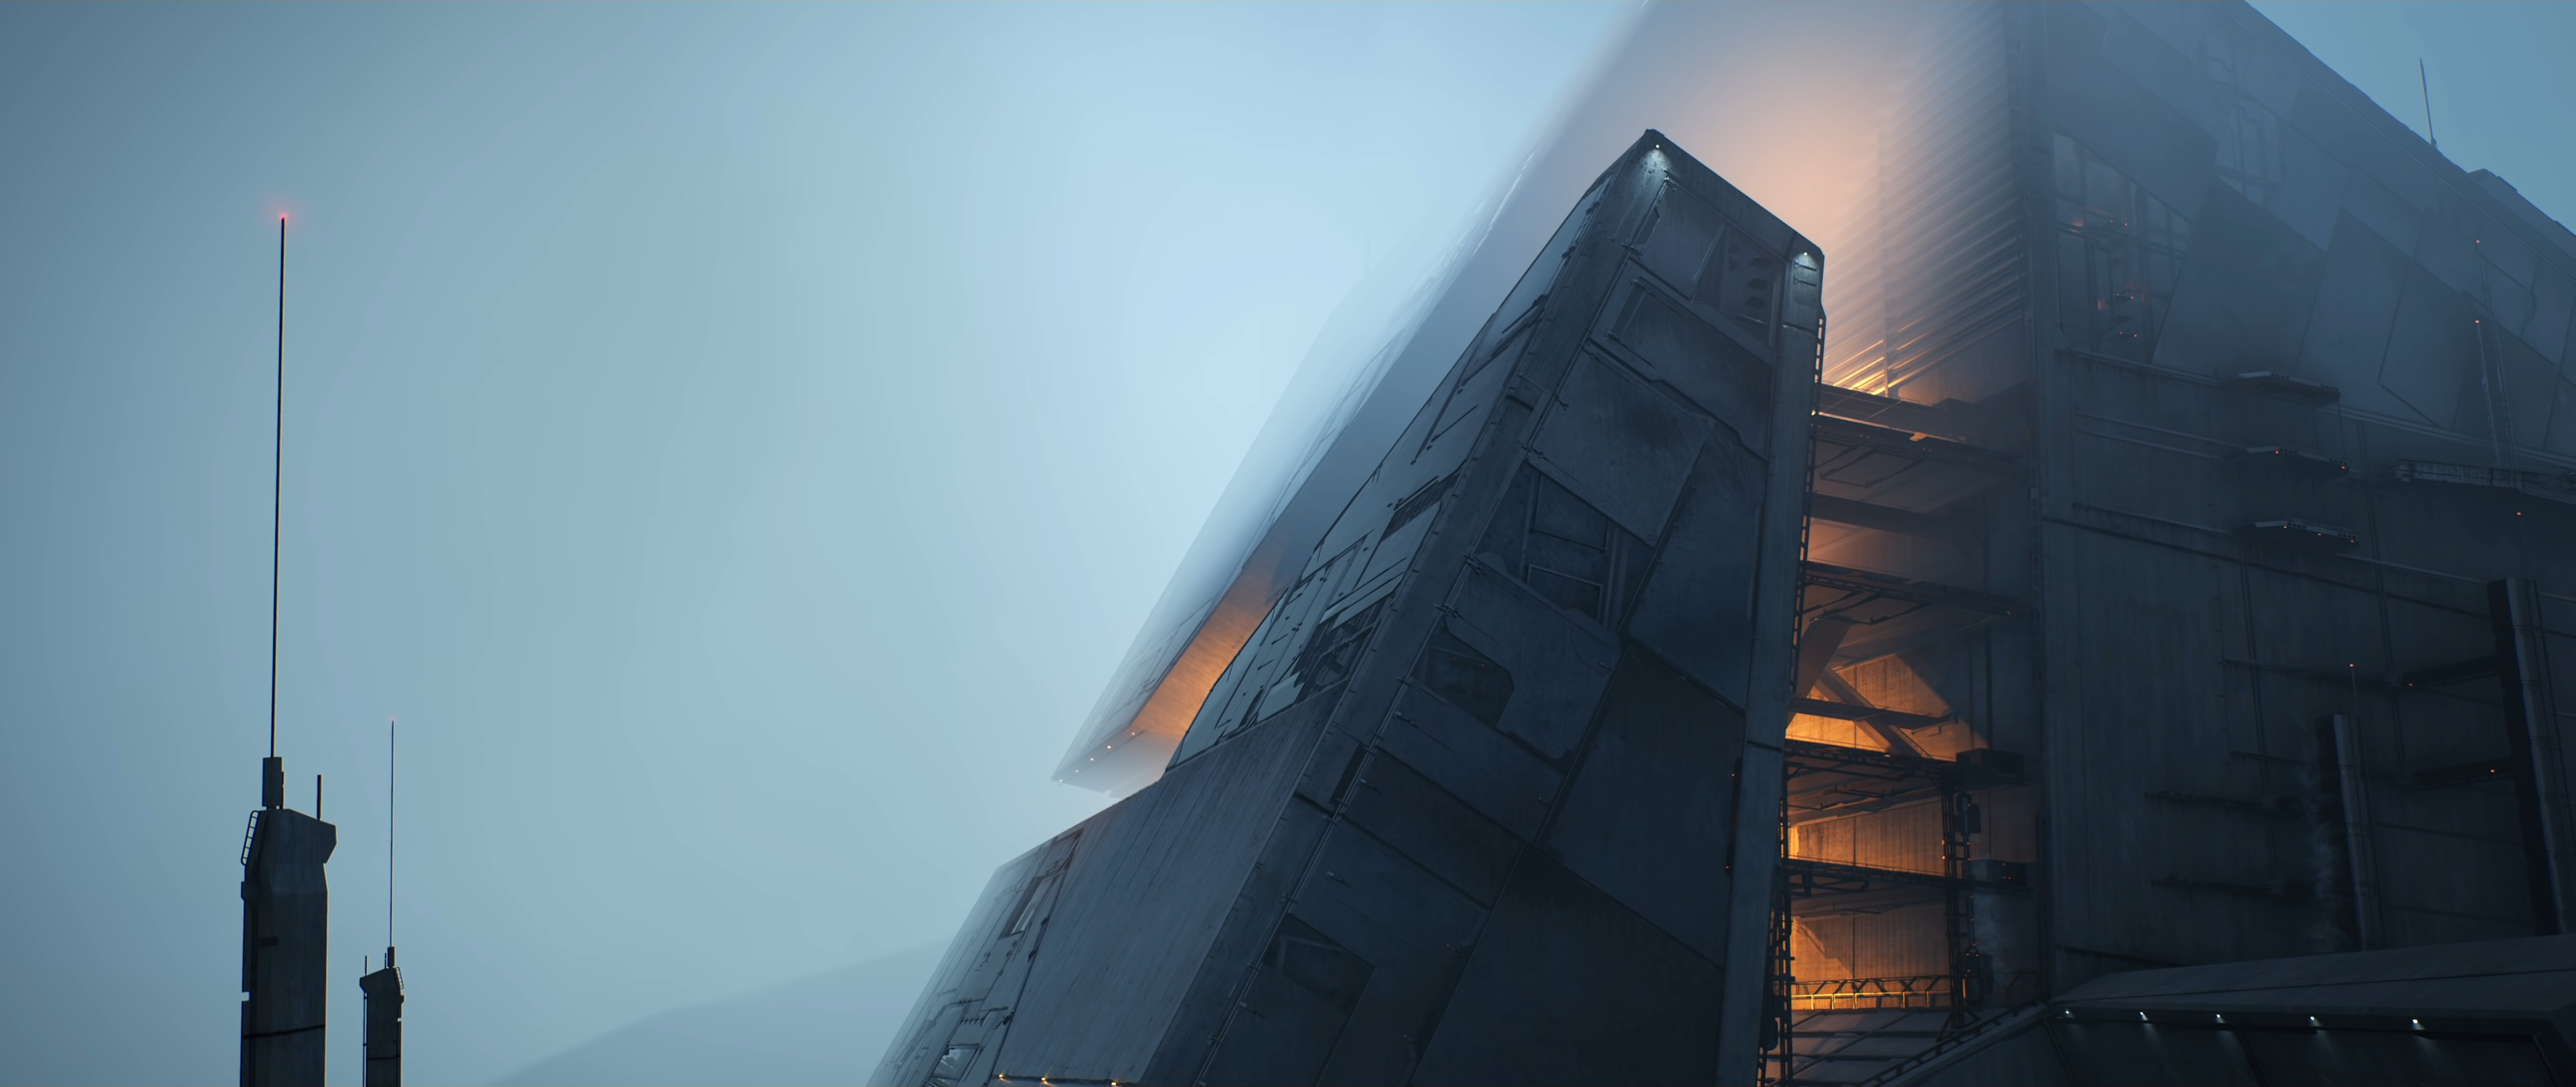 Digital Art Building Facade Lights Mist Unreal Engine 4 Iceland CGi Screengrab 3840x1620